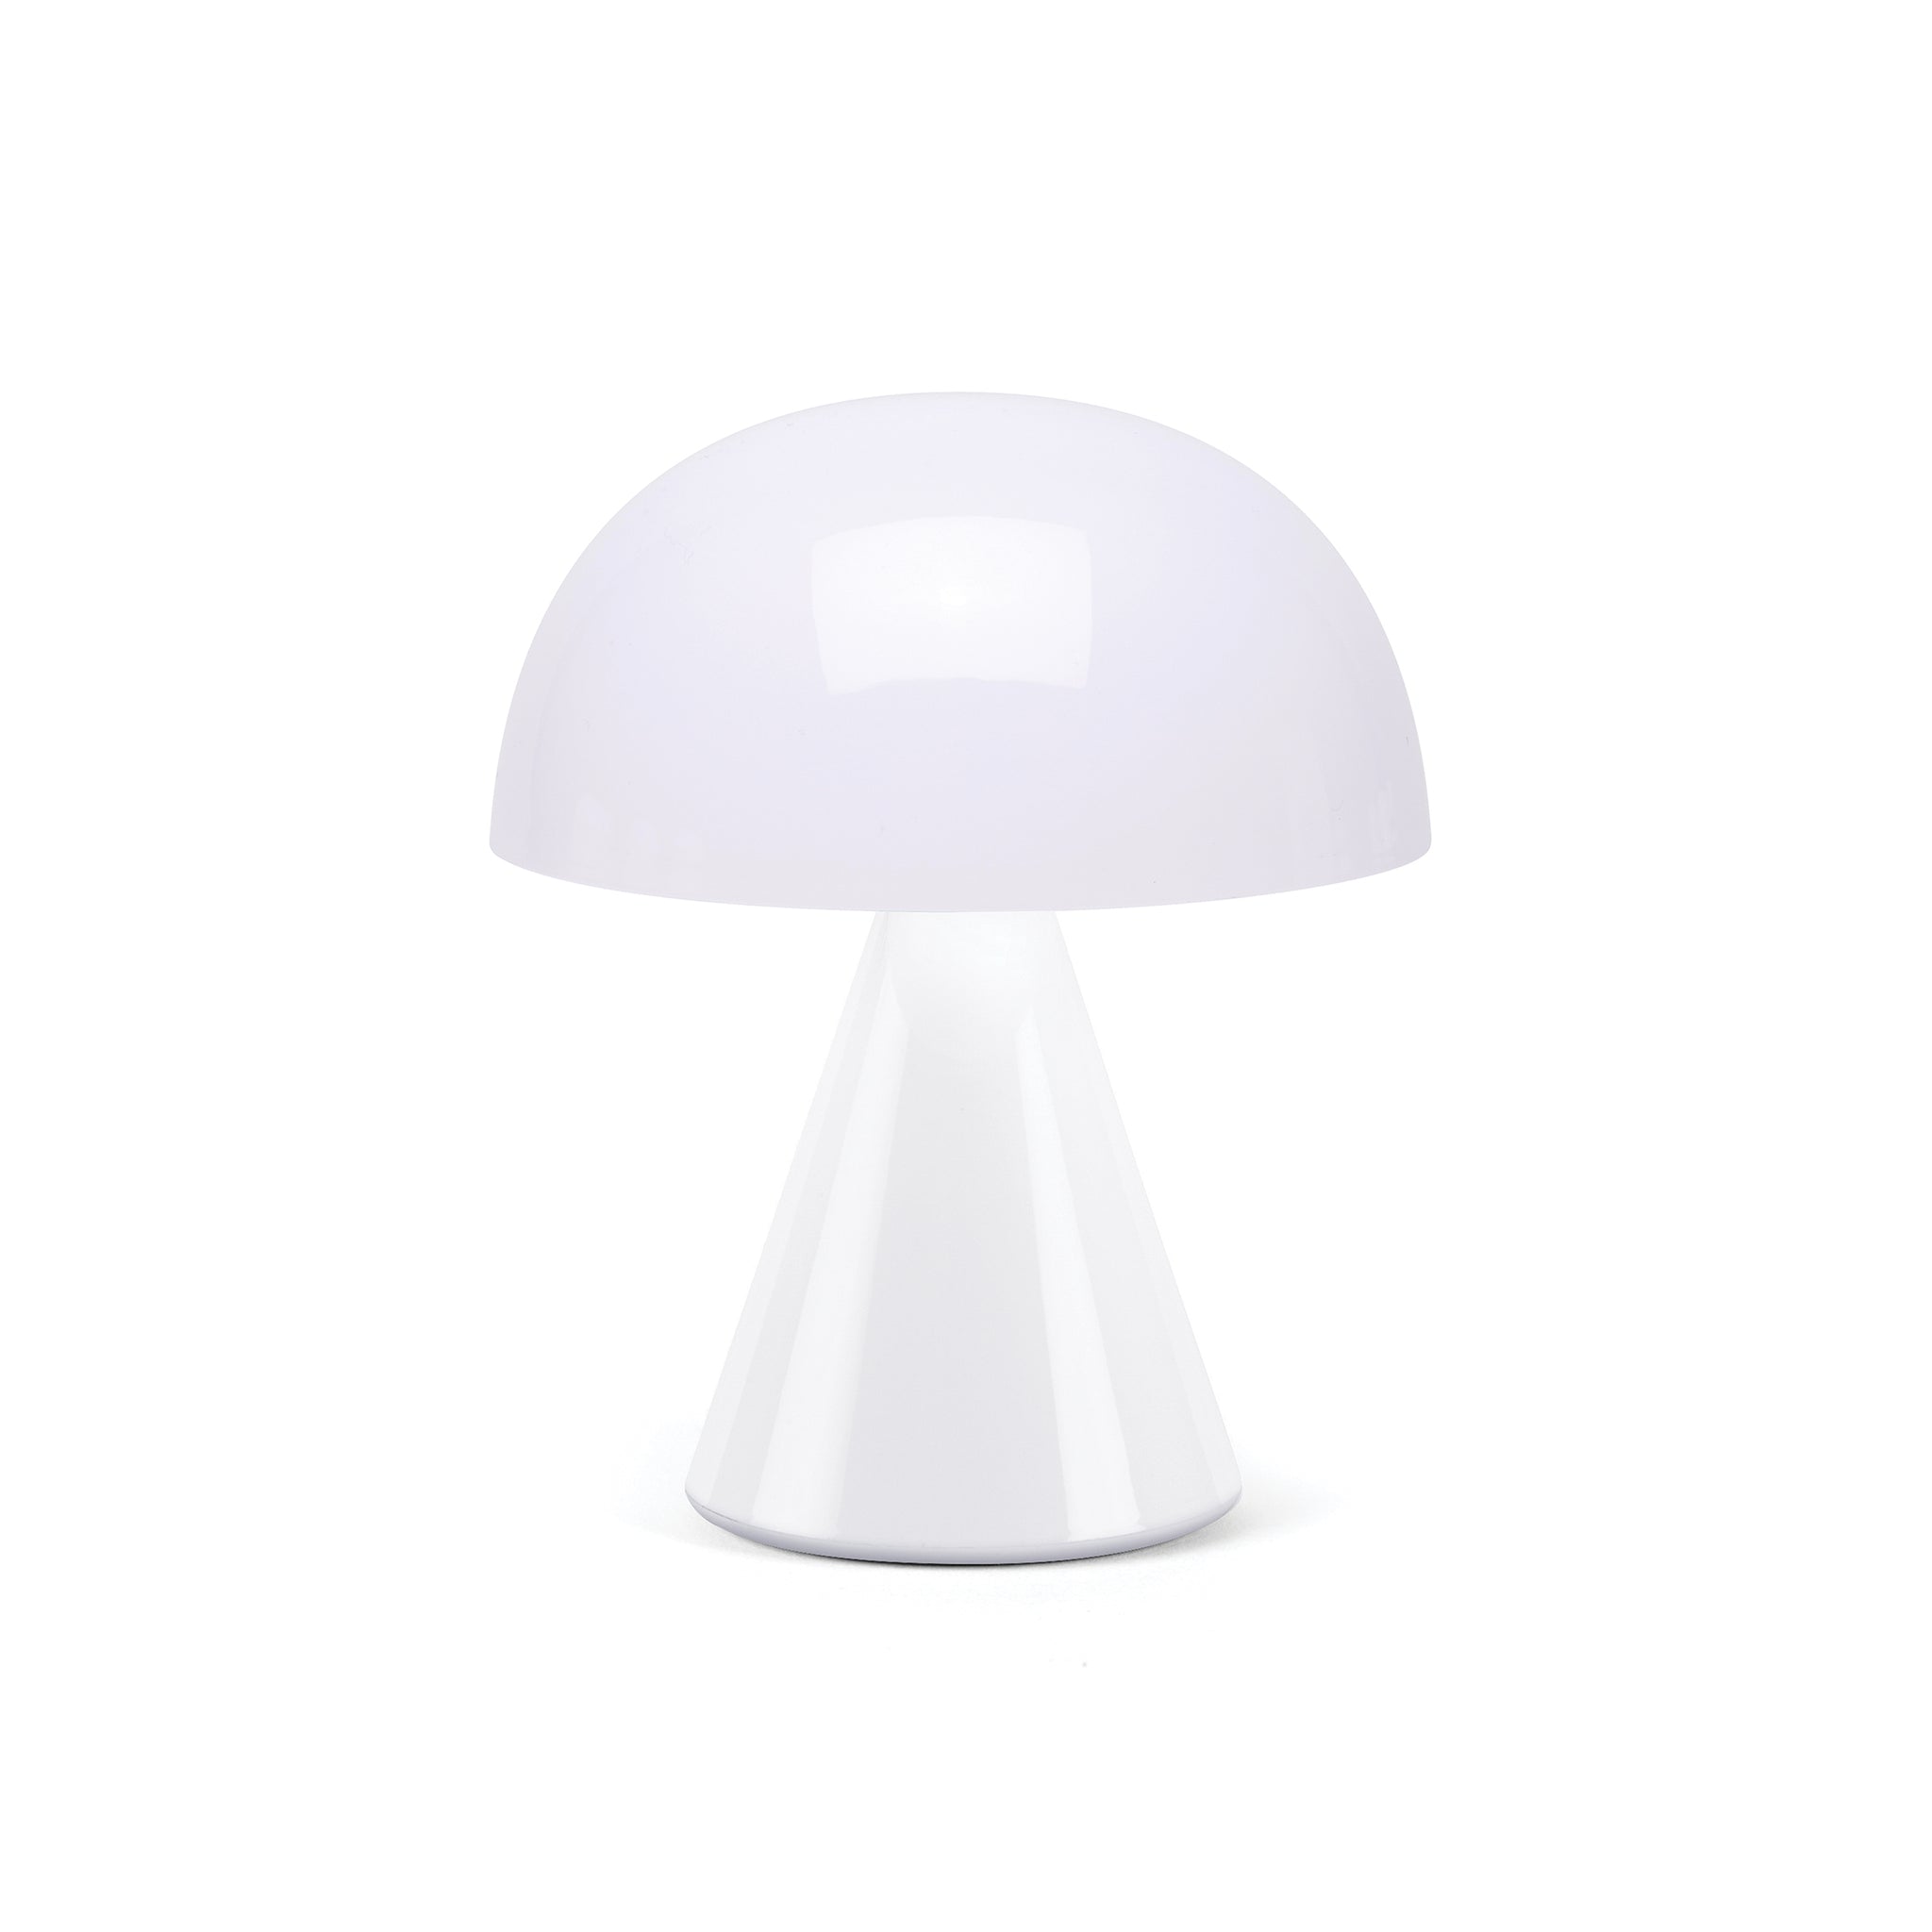 Lexon Mina Medium Glossy White│Oplaadbare LED-Lamp│art. LH64WG│vooraanzicht met licht uit